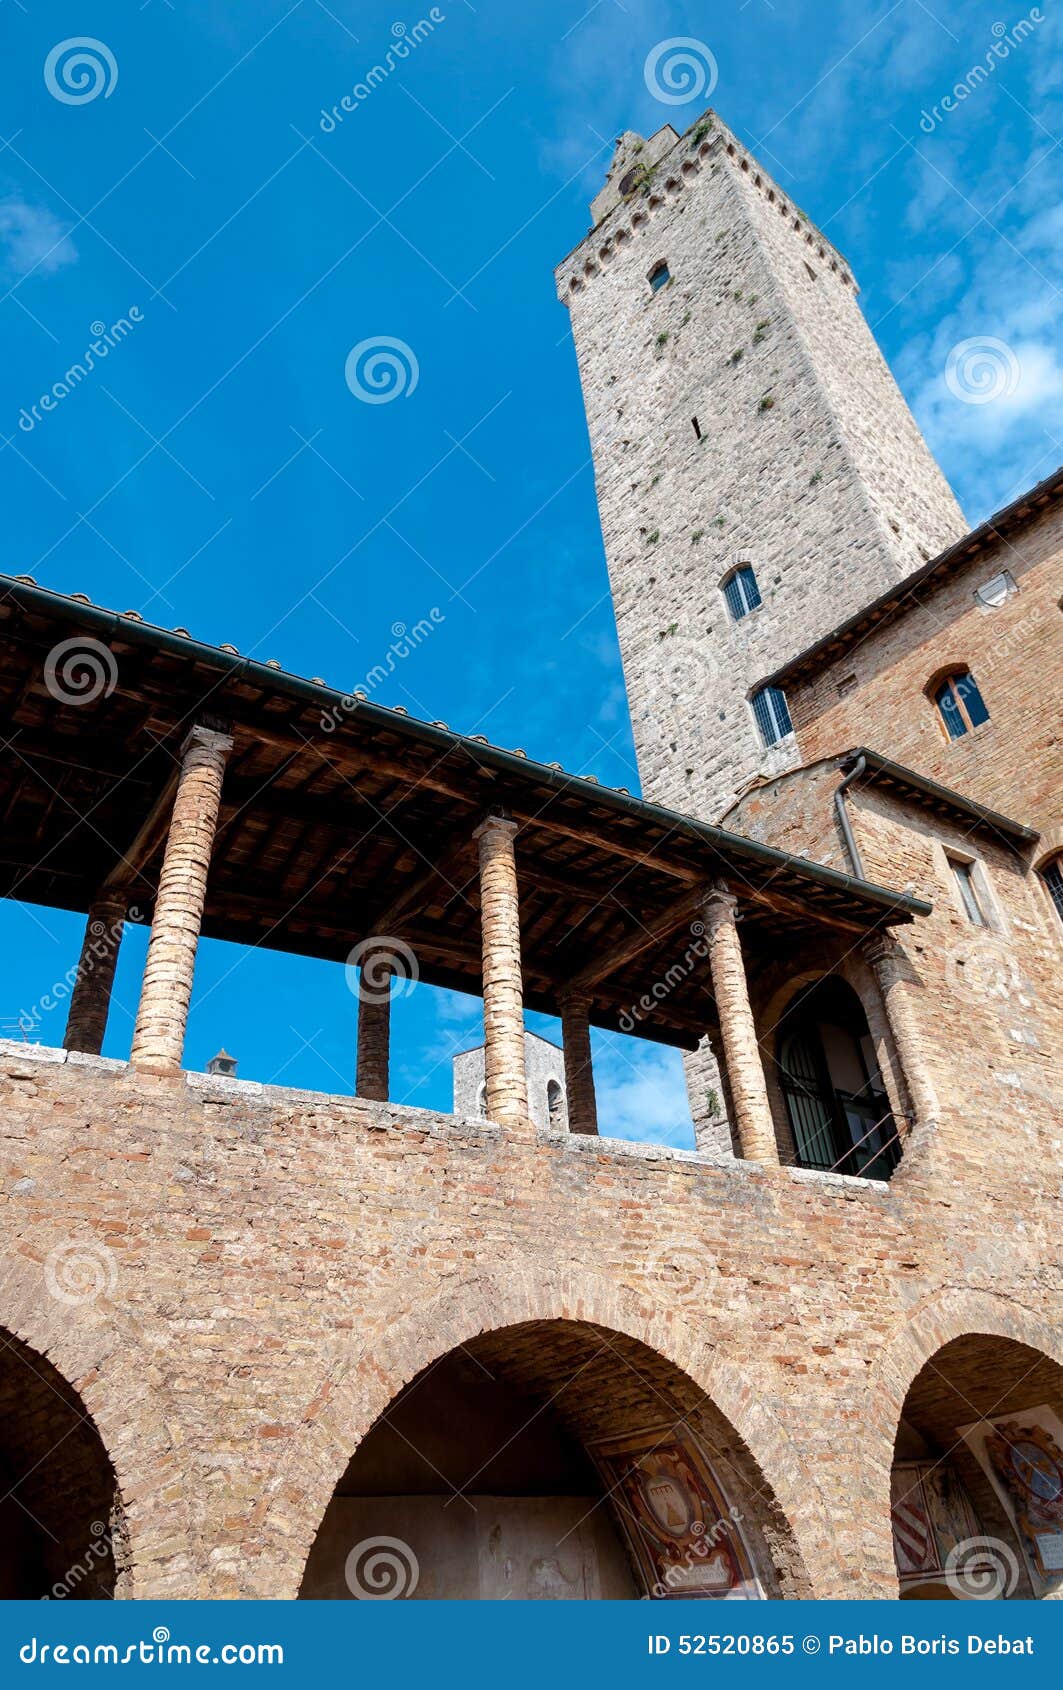 palazzo comunale details and tower at san gimignano